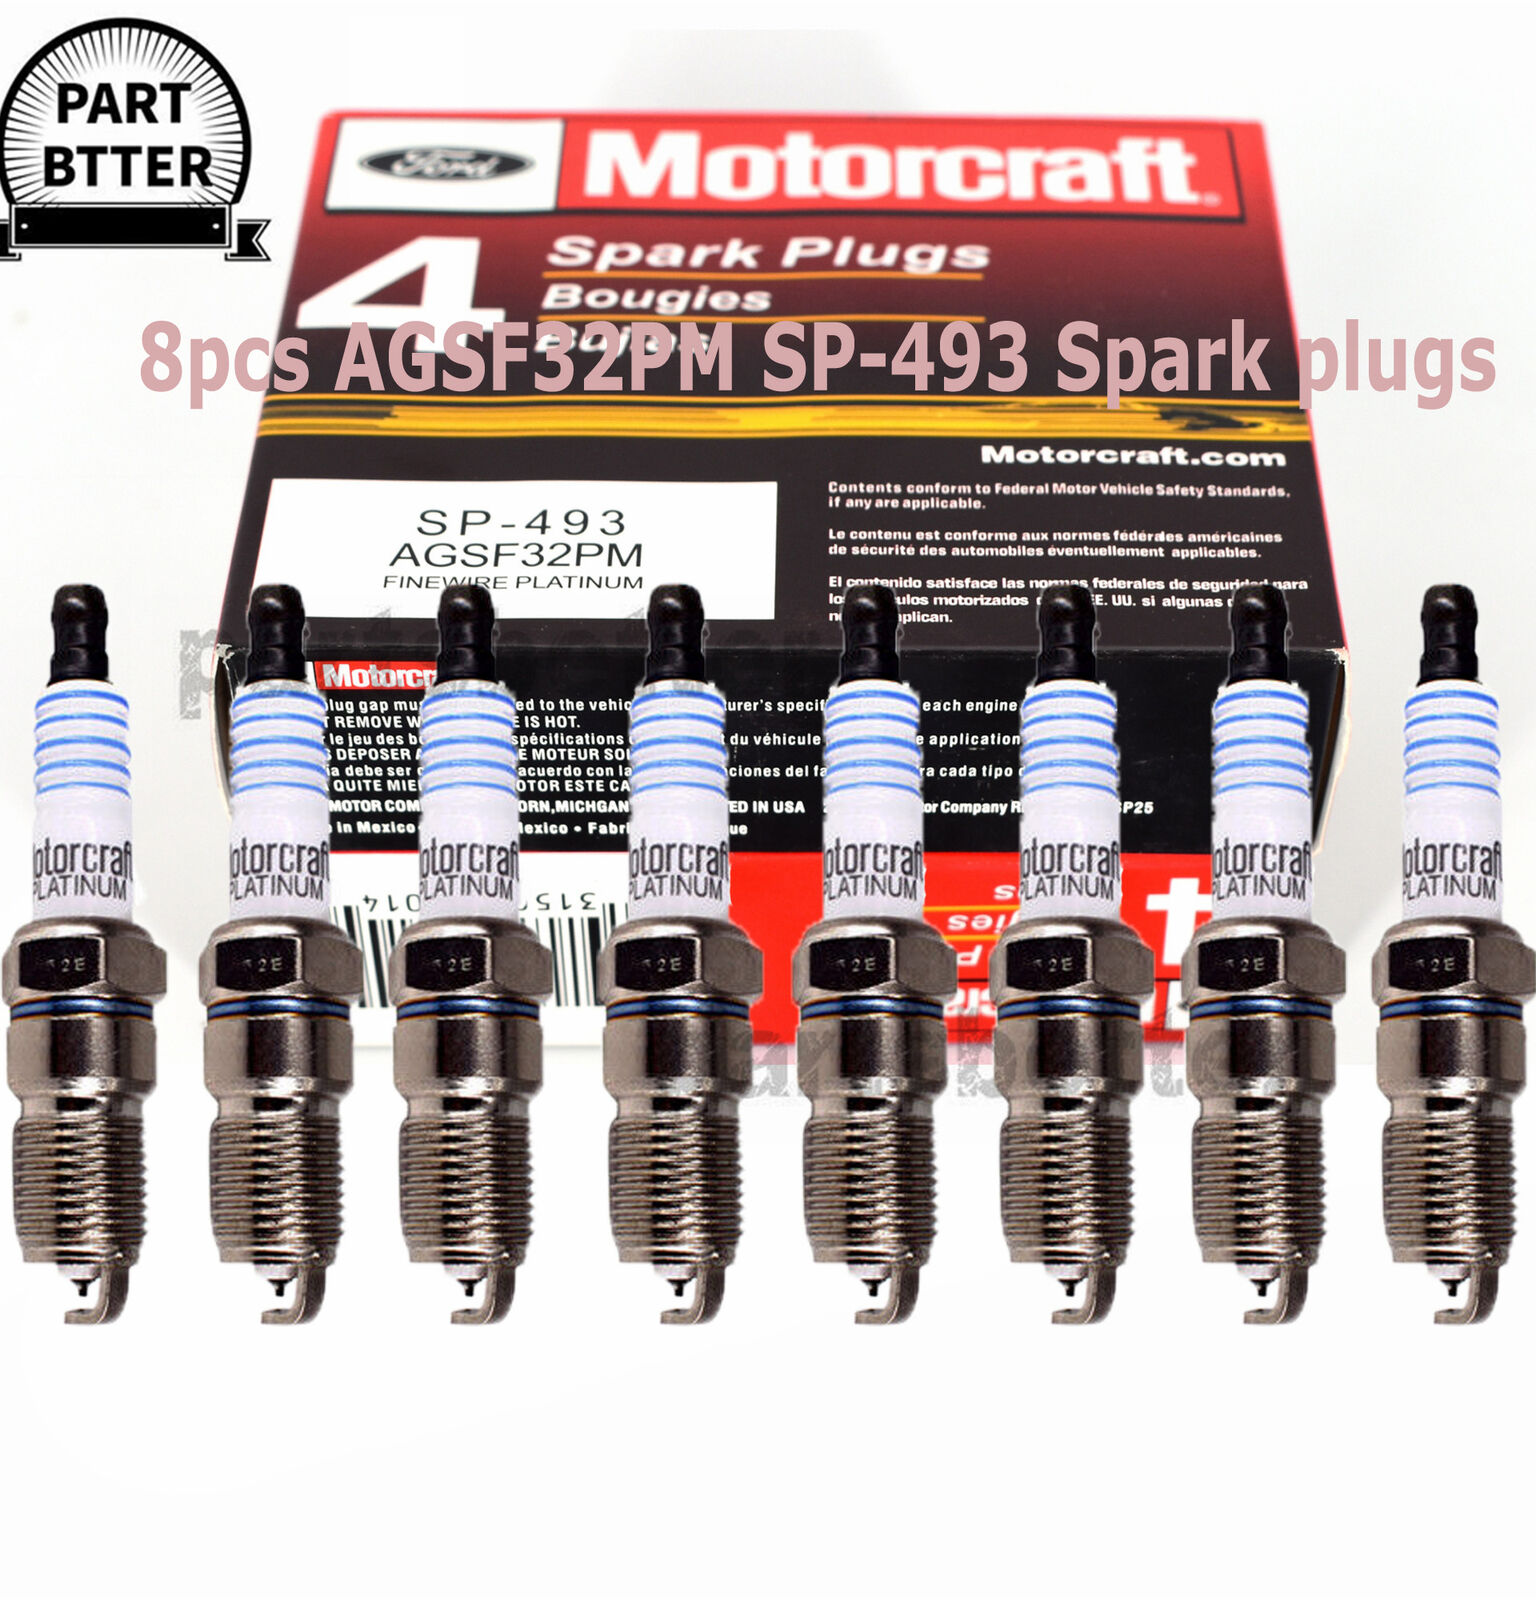 8pcs Motorcraft Platinum Spark Plugs OEM SP493 AGSF32PM For Ford 4.6L 5.4L V8